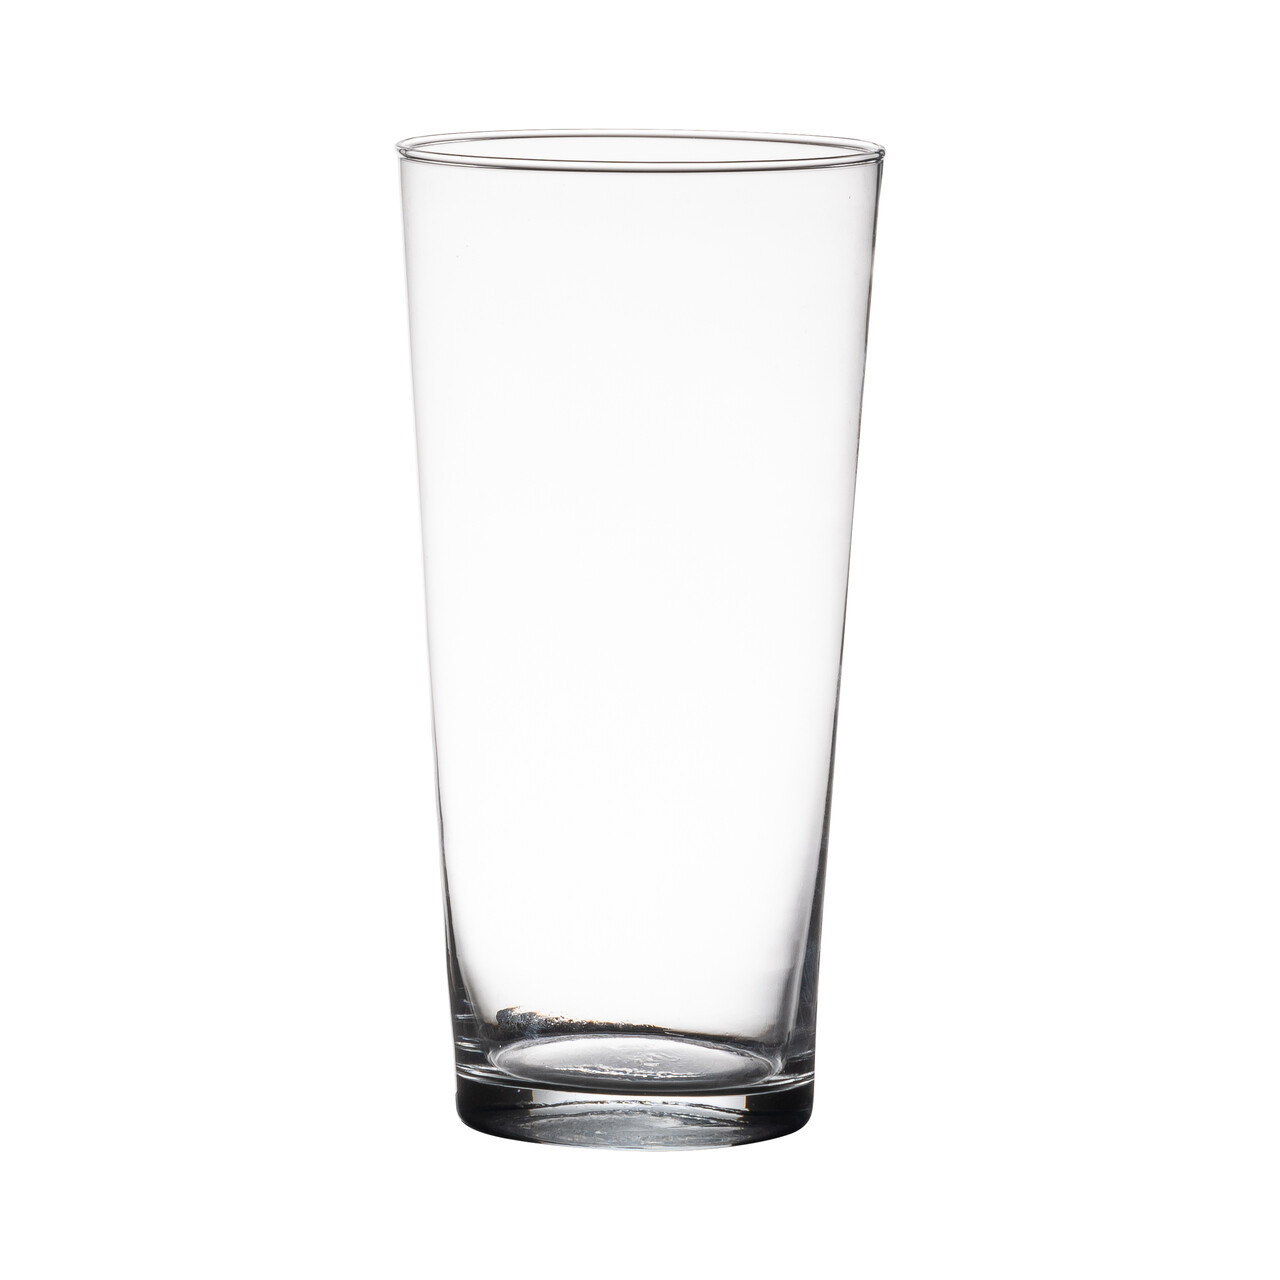 Merkloos Transparante home-basics conische vaas/vazen van glas 29 x 16 cm -